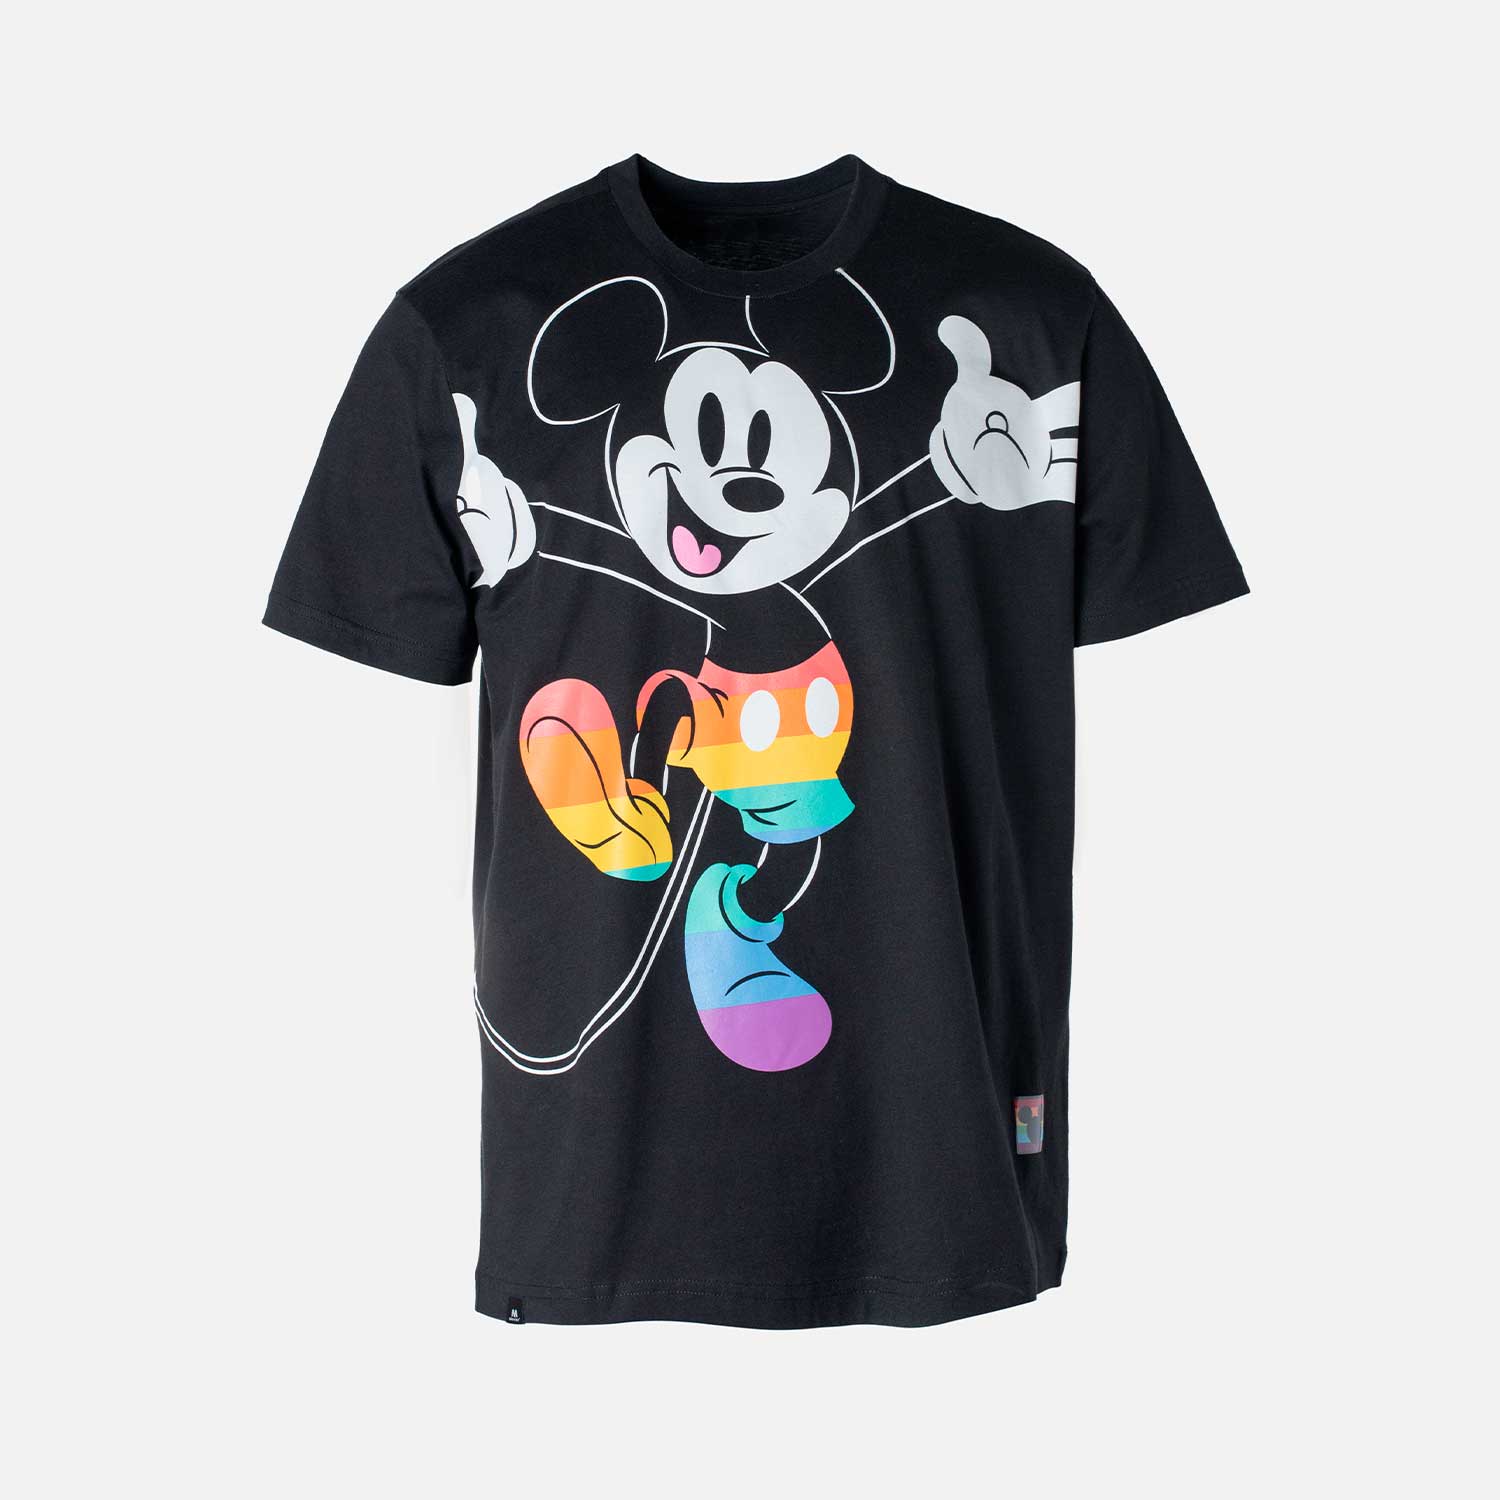 No pretencioso Taxi Comiendo Camiseta de Mickey Mouse negra manga corta género neutro